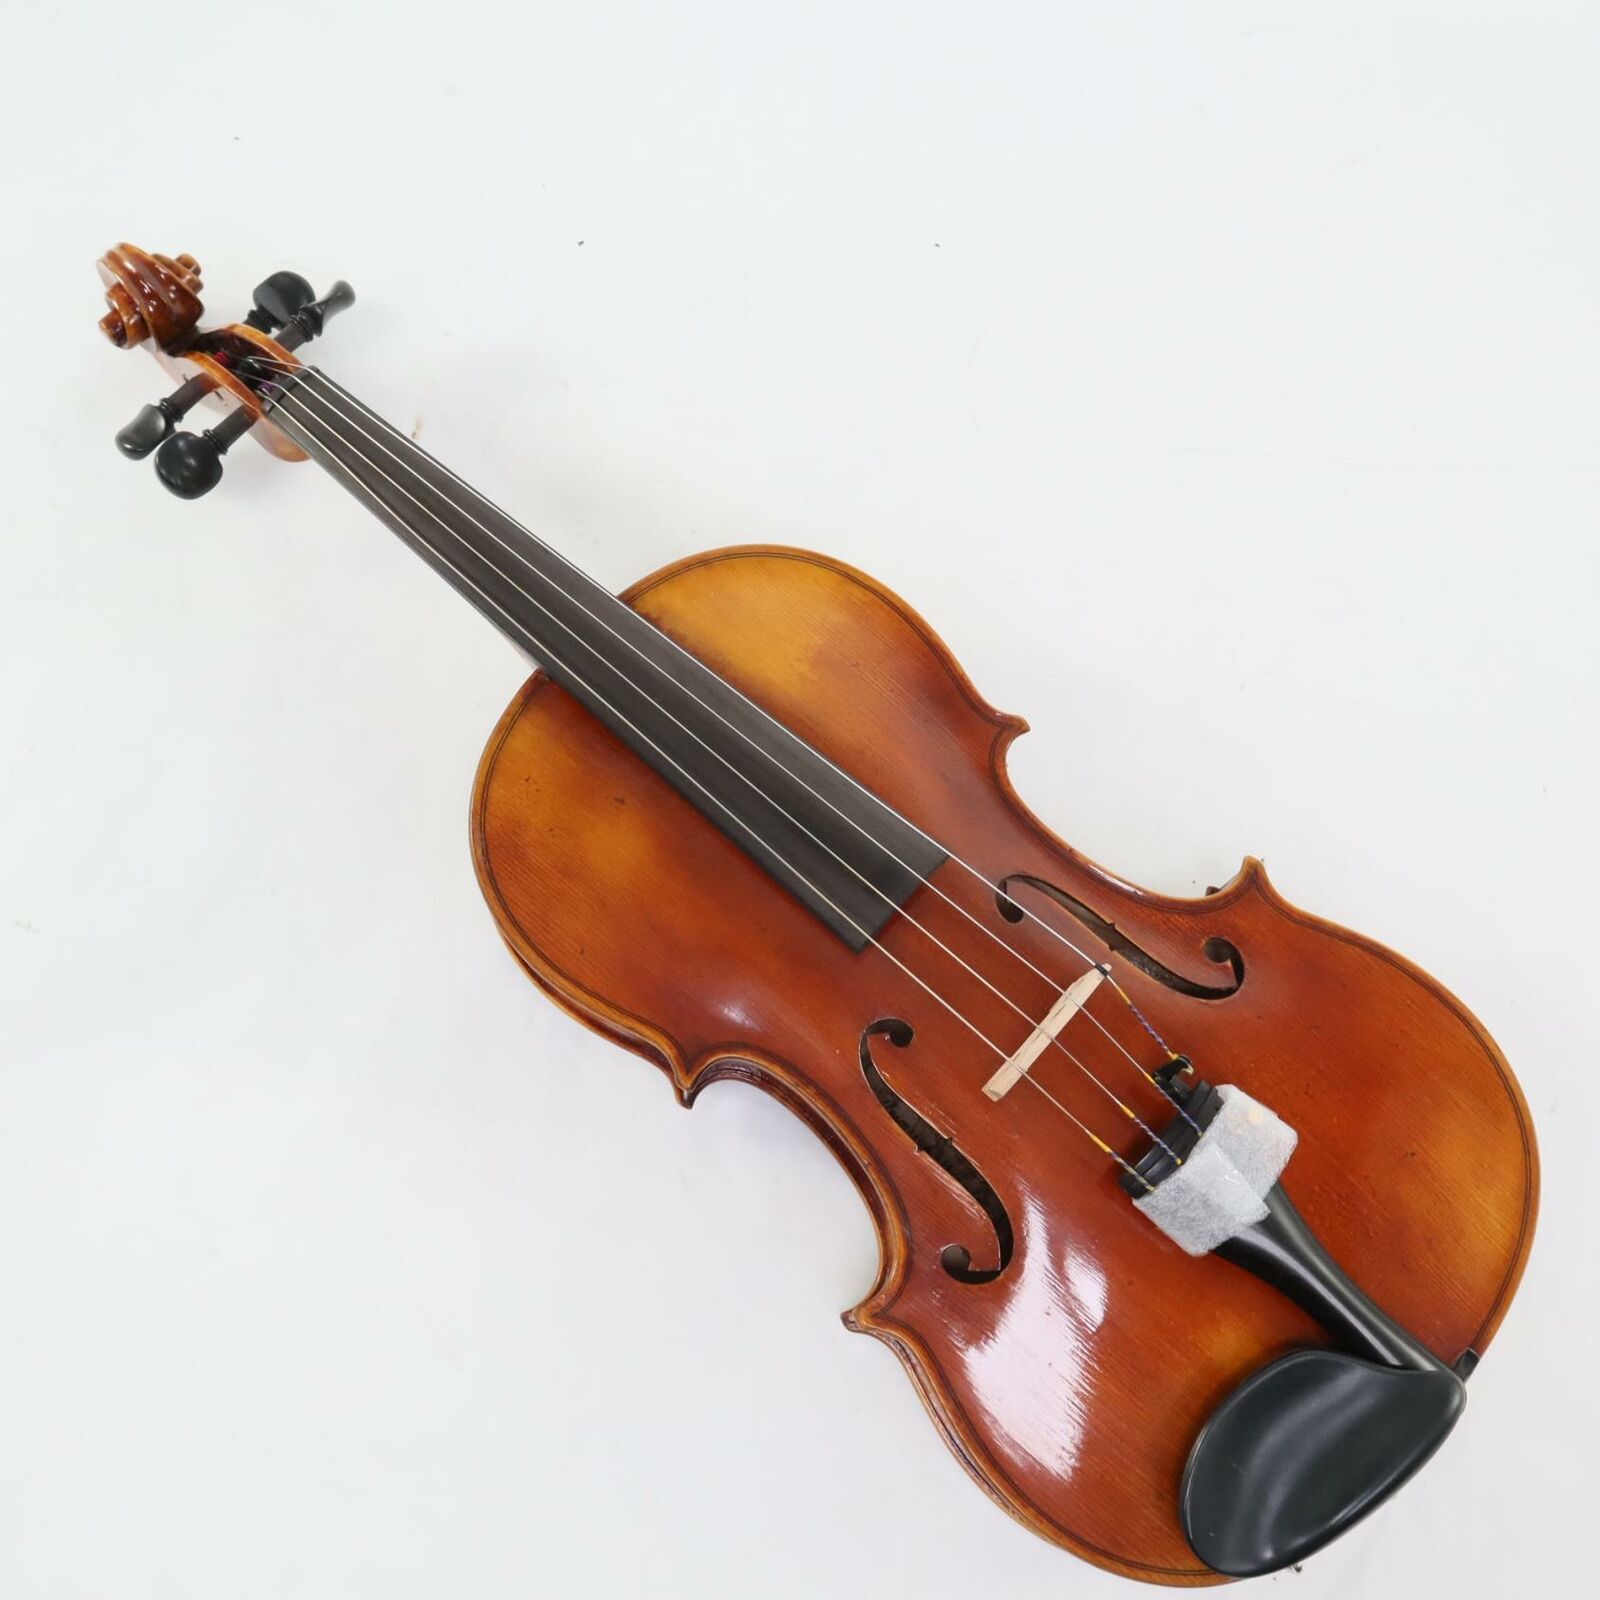 Glaesel Model Vag2e15 'heimrich Werner' 15 Inch Viola - Viola Only - Brand New